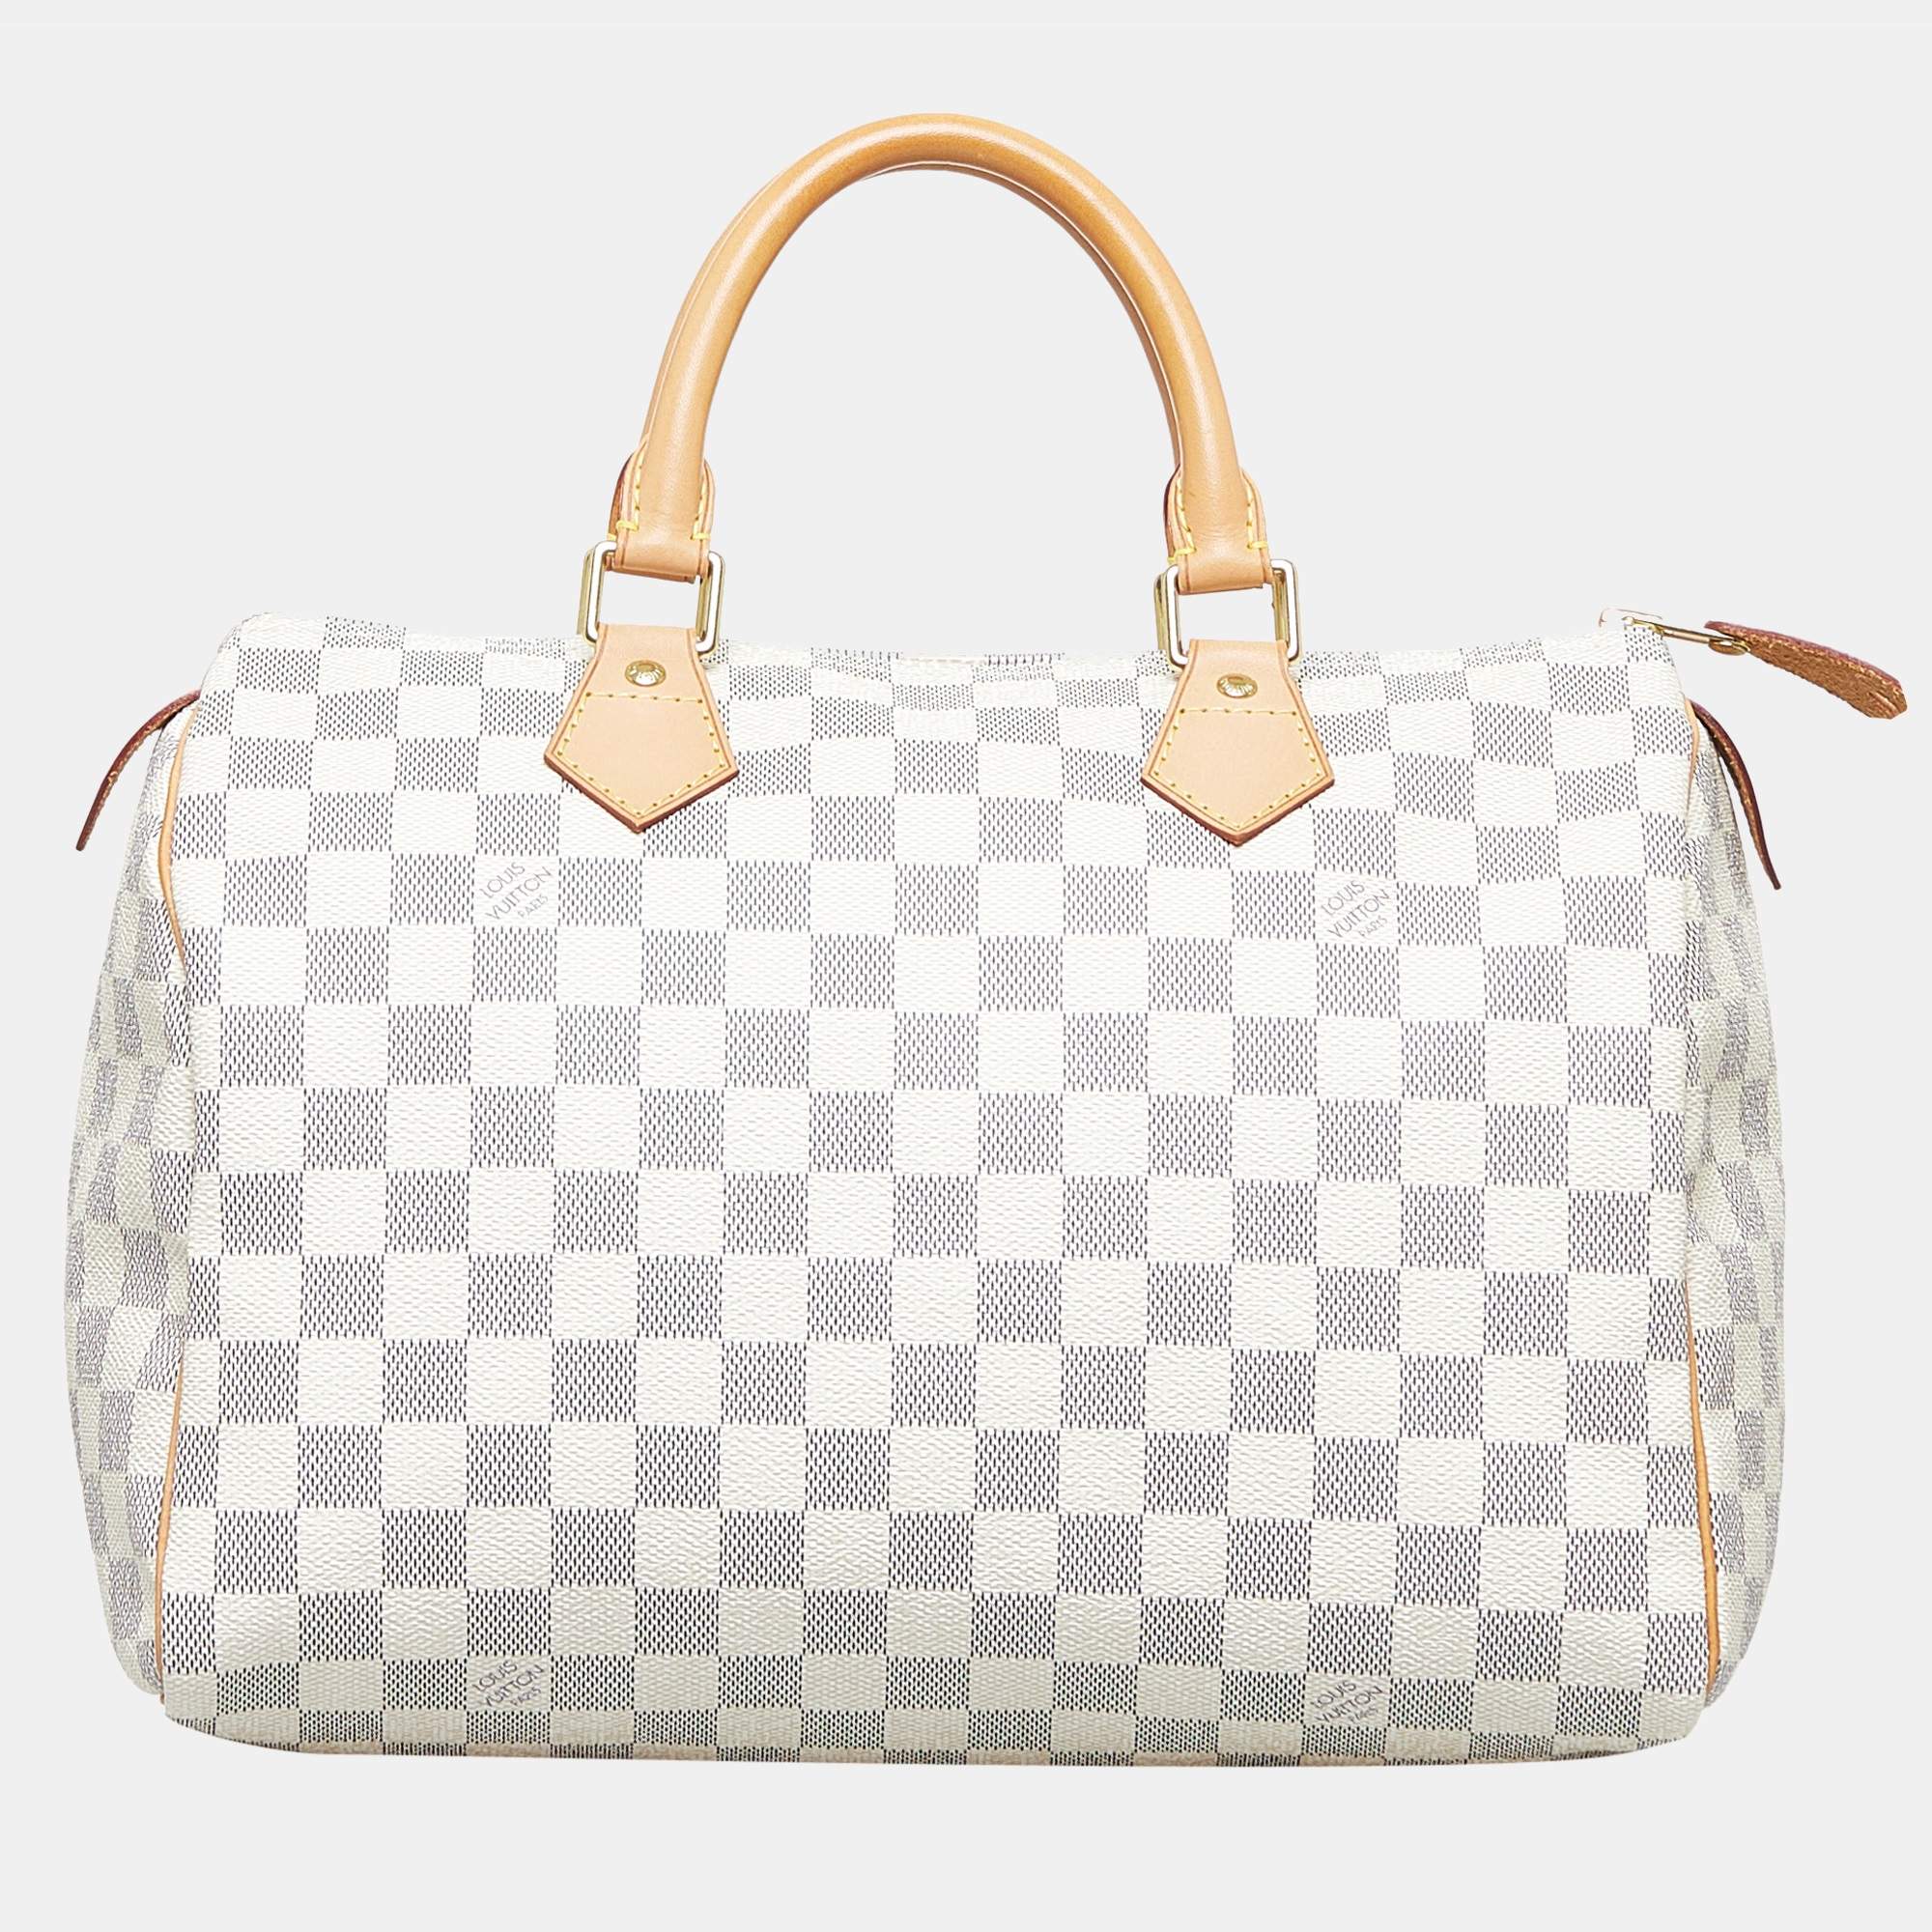 Authentic LOUIS VUITTON Speedy 30 Damier Azur White Hand Bag Purse